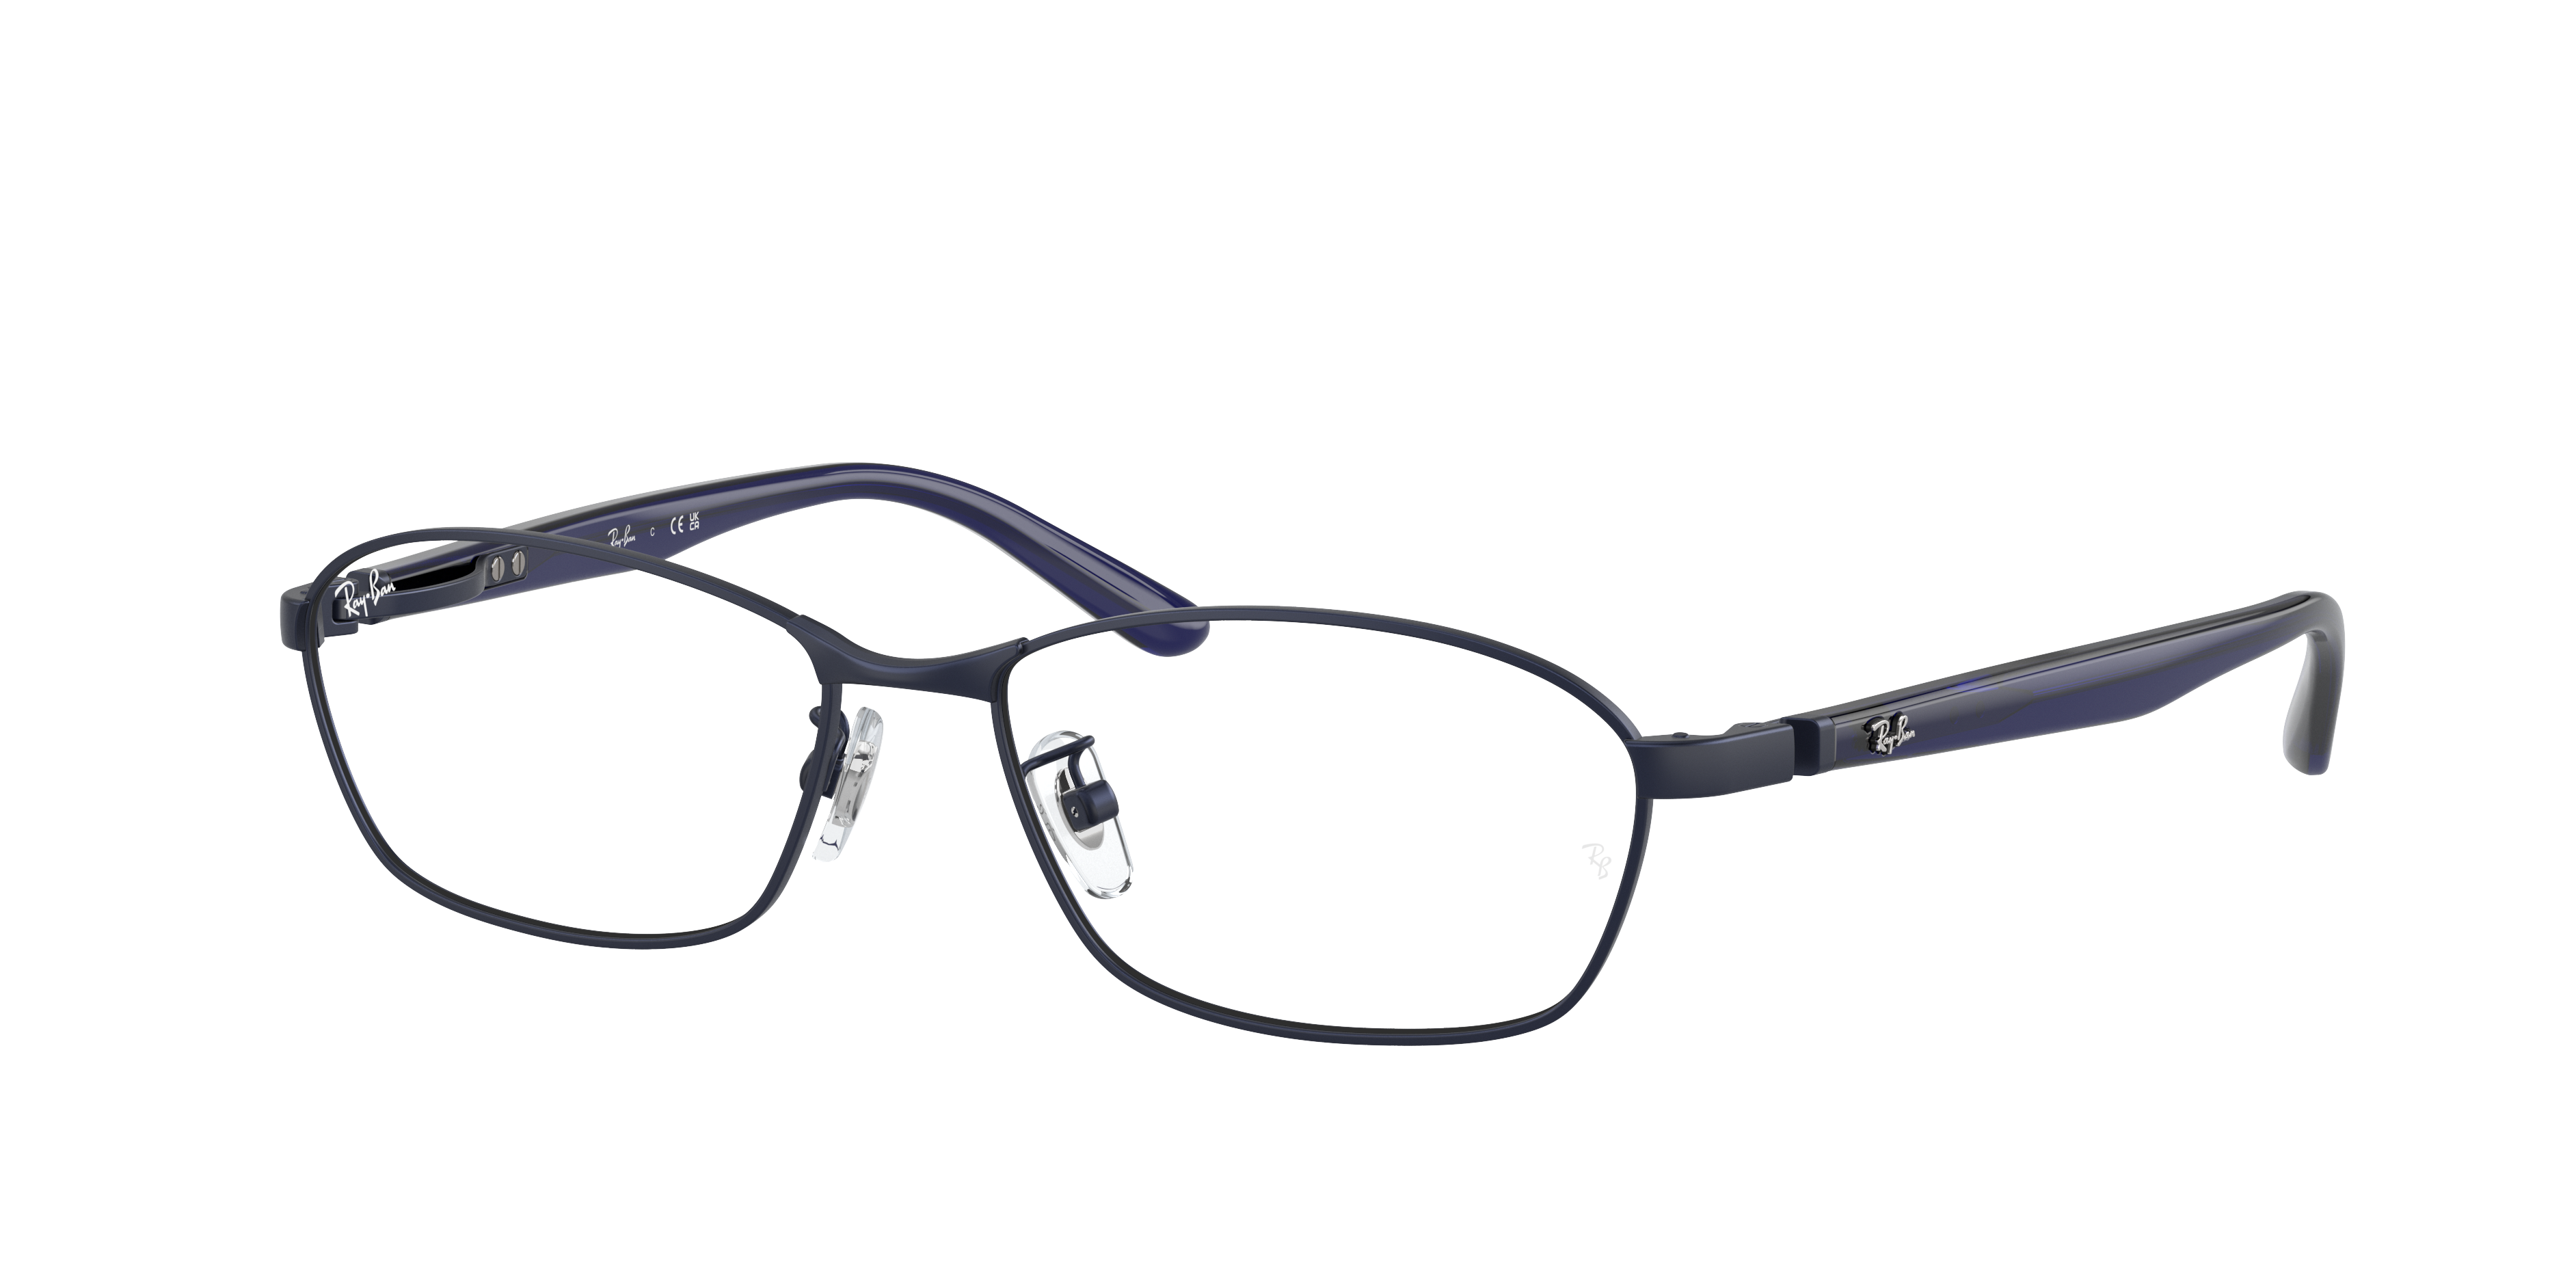 Rb6502 Optics Eyeglasses with Blue Frame - RB6502D | Ray-Ban®